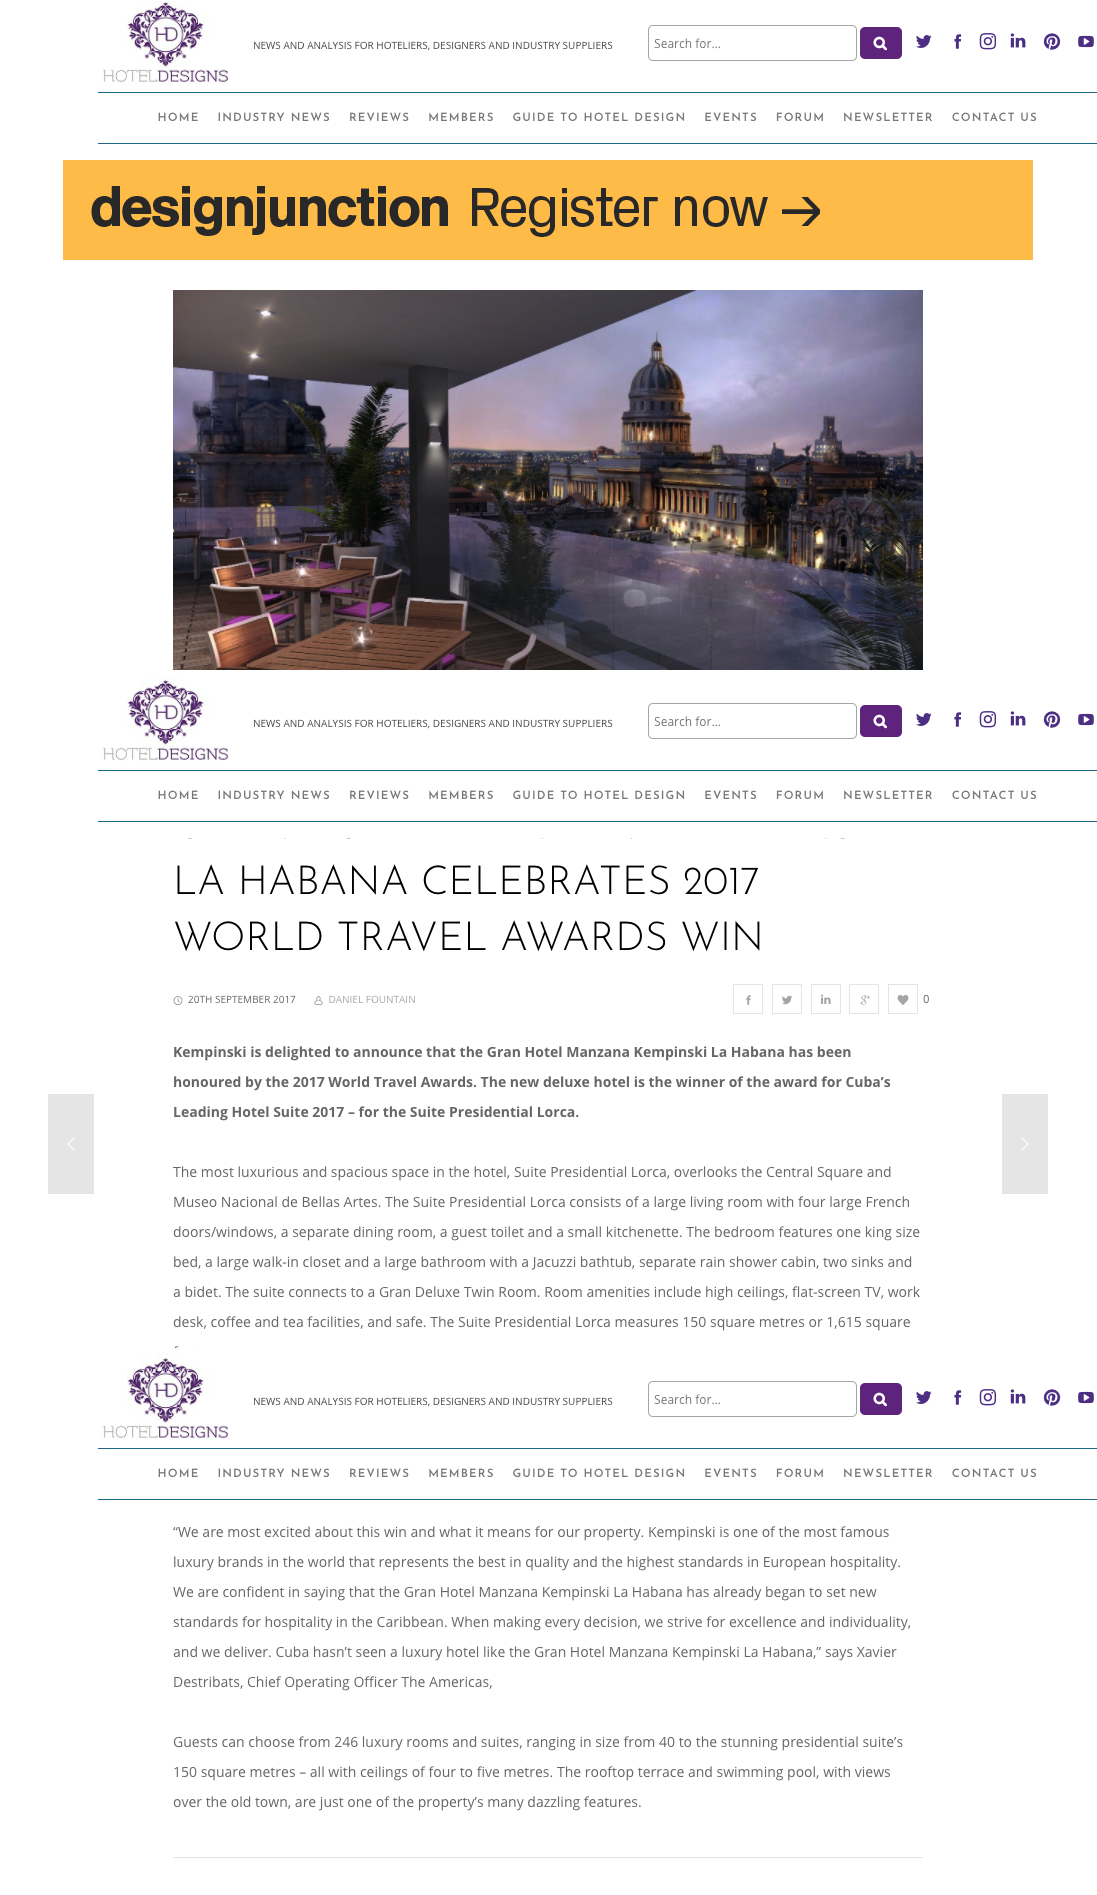 Gran Hotel Manzana Kempinski La Habana celebrates 2017 World Travel Awards win